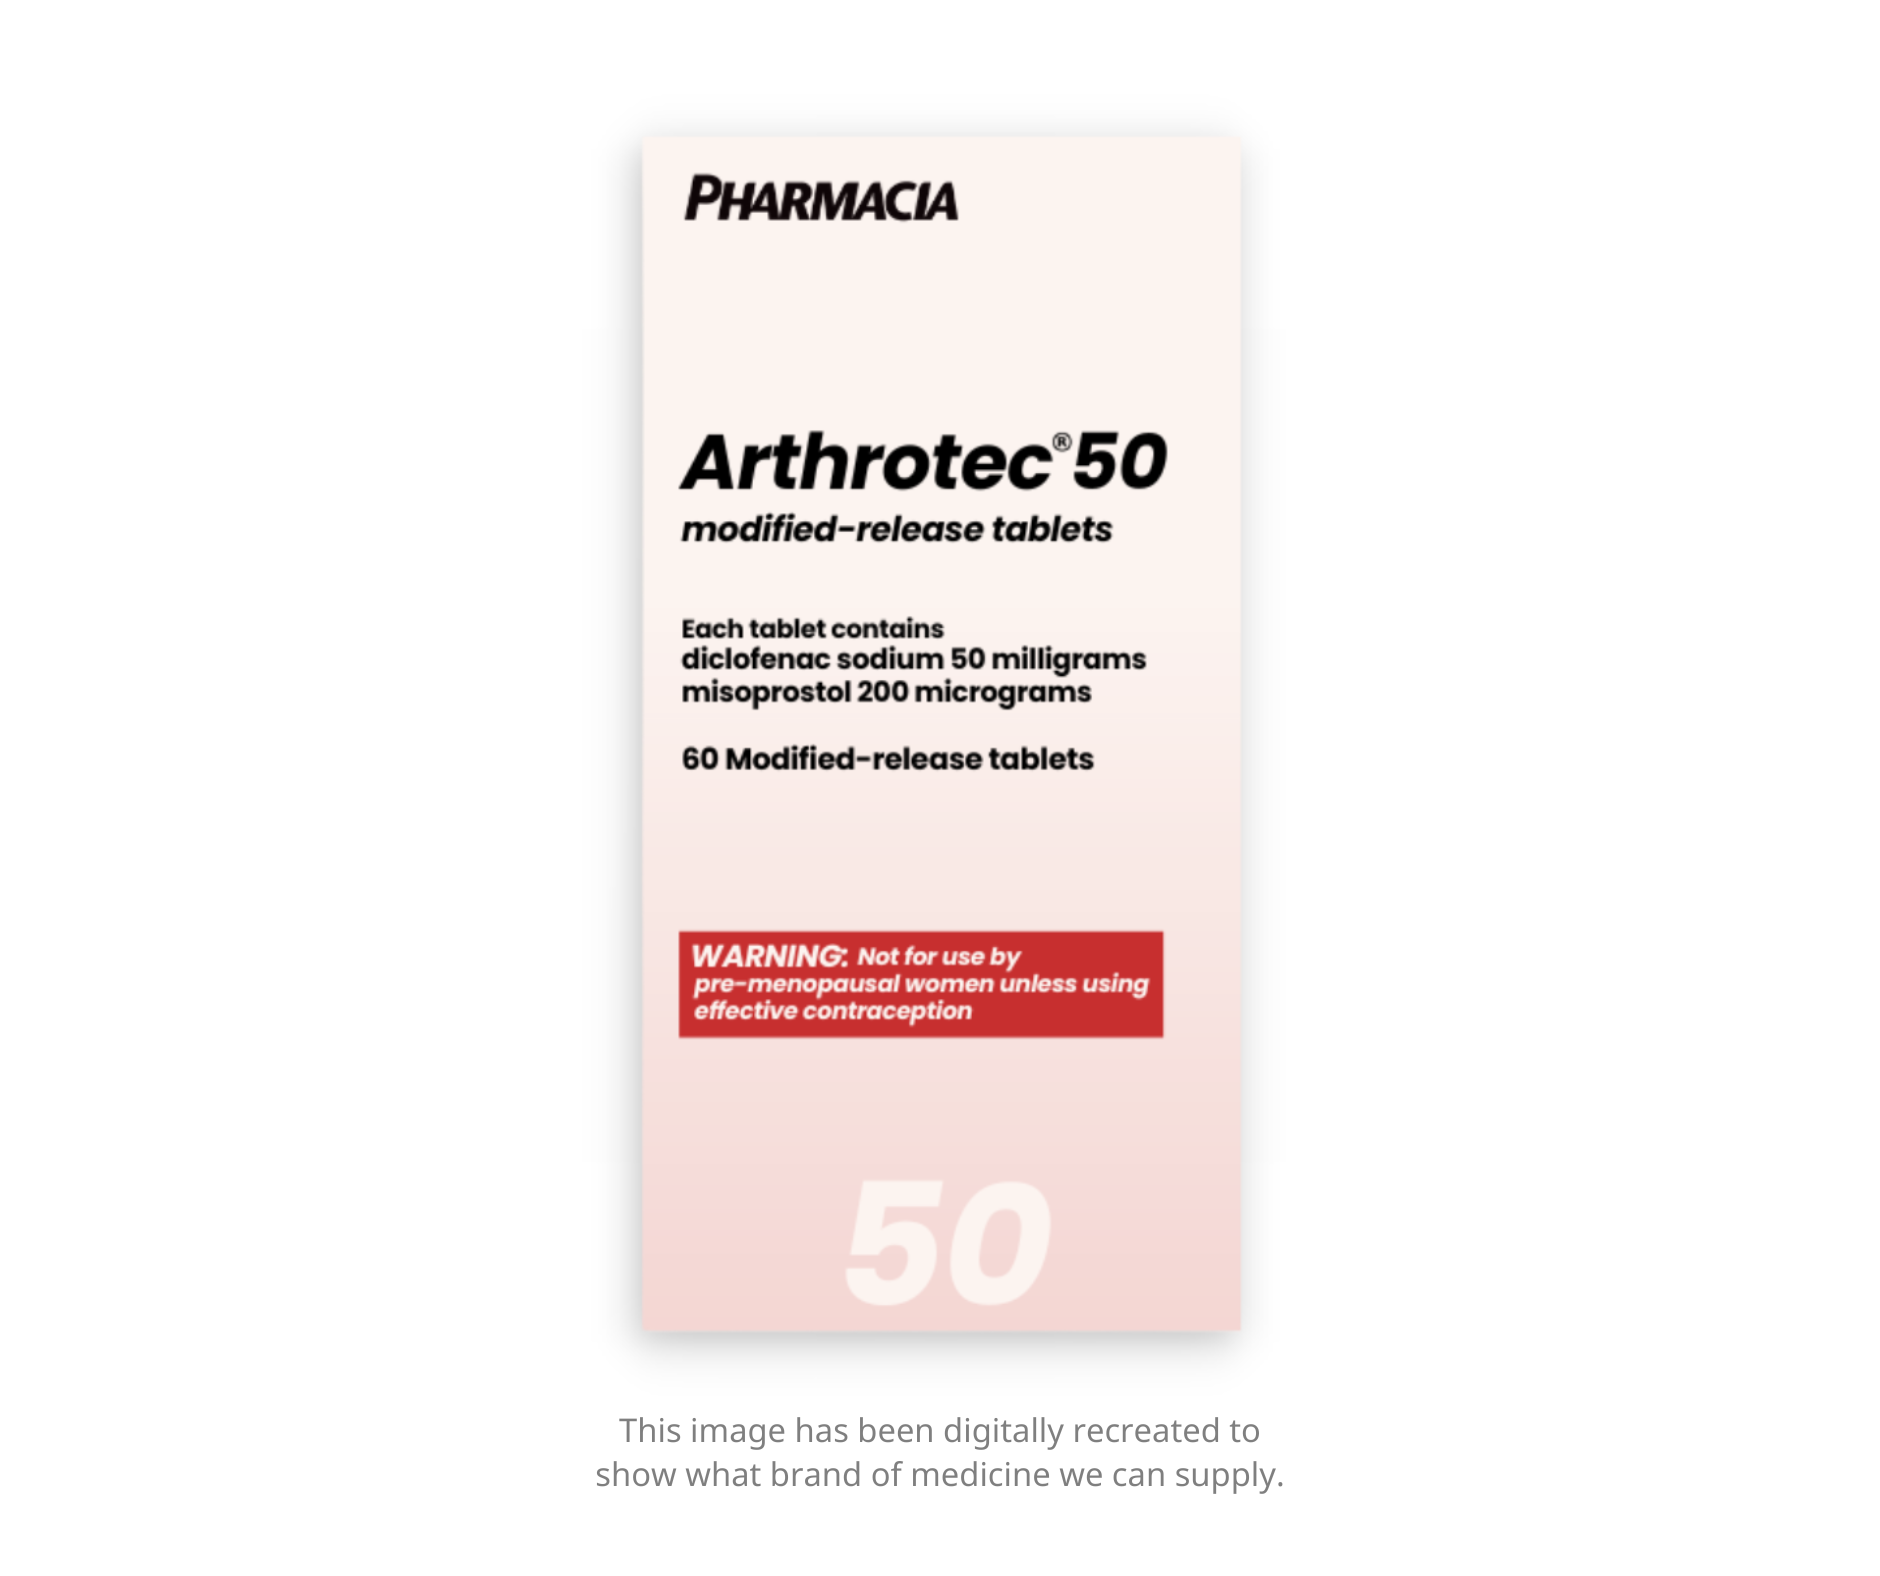 Arthrotec tablets - 50mg diclofenac sodium / 200 micrograms misoprostol